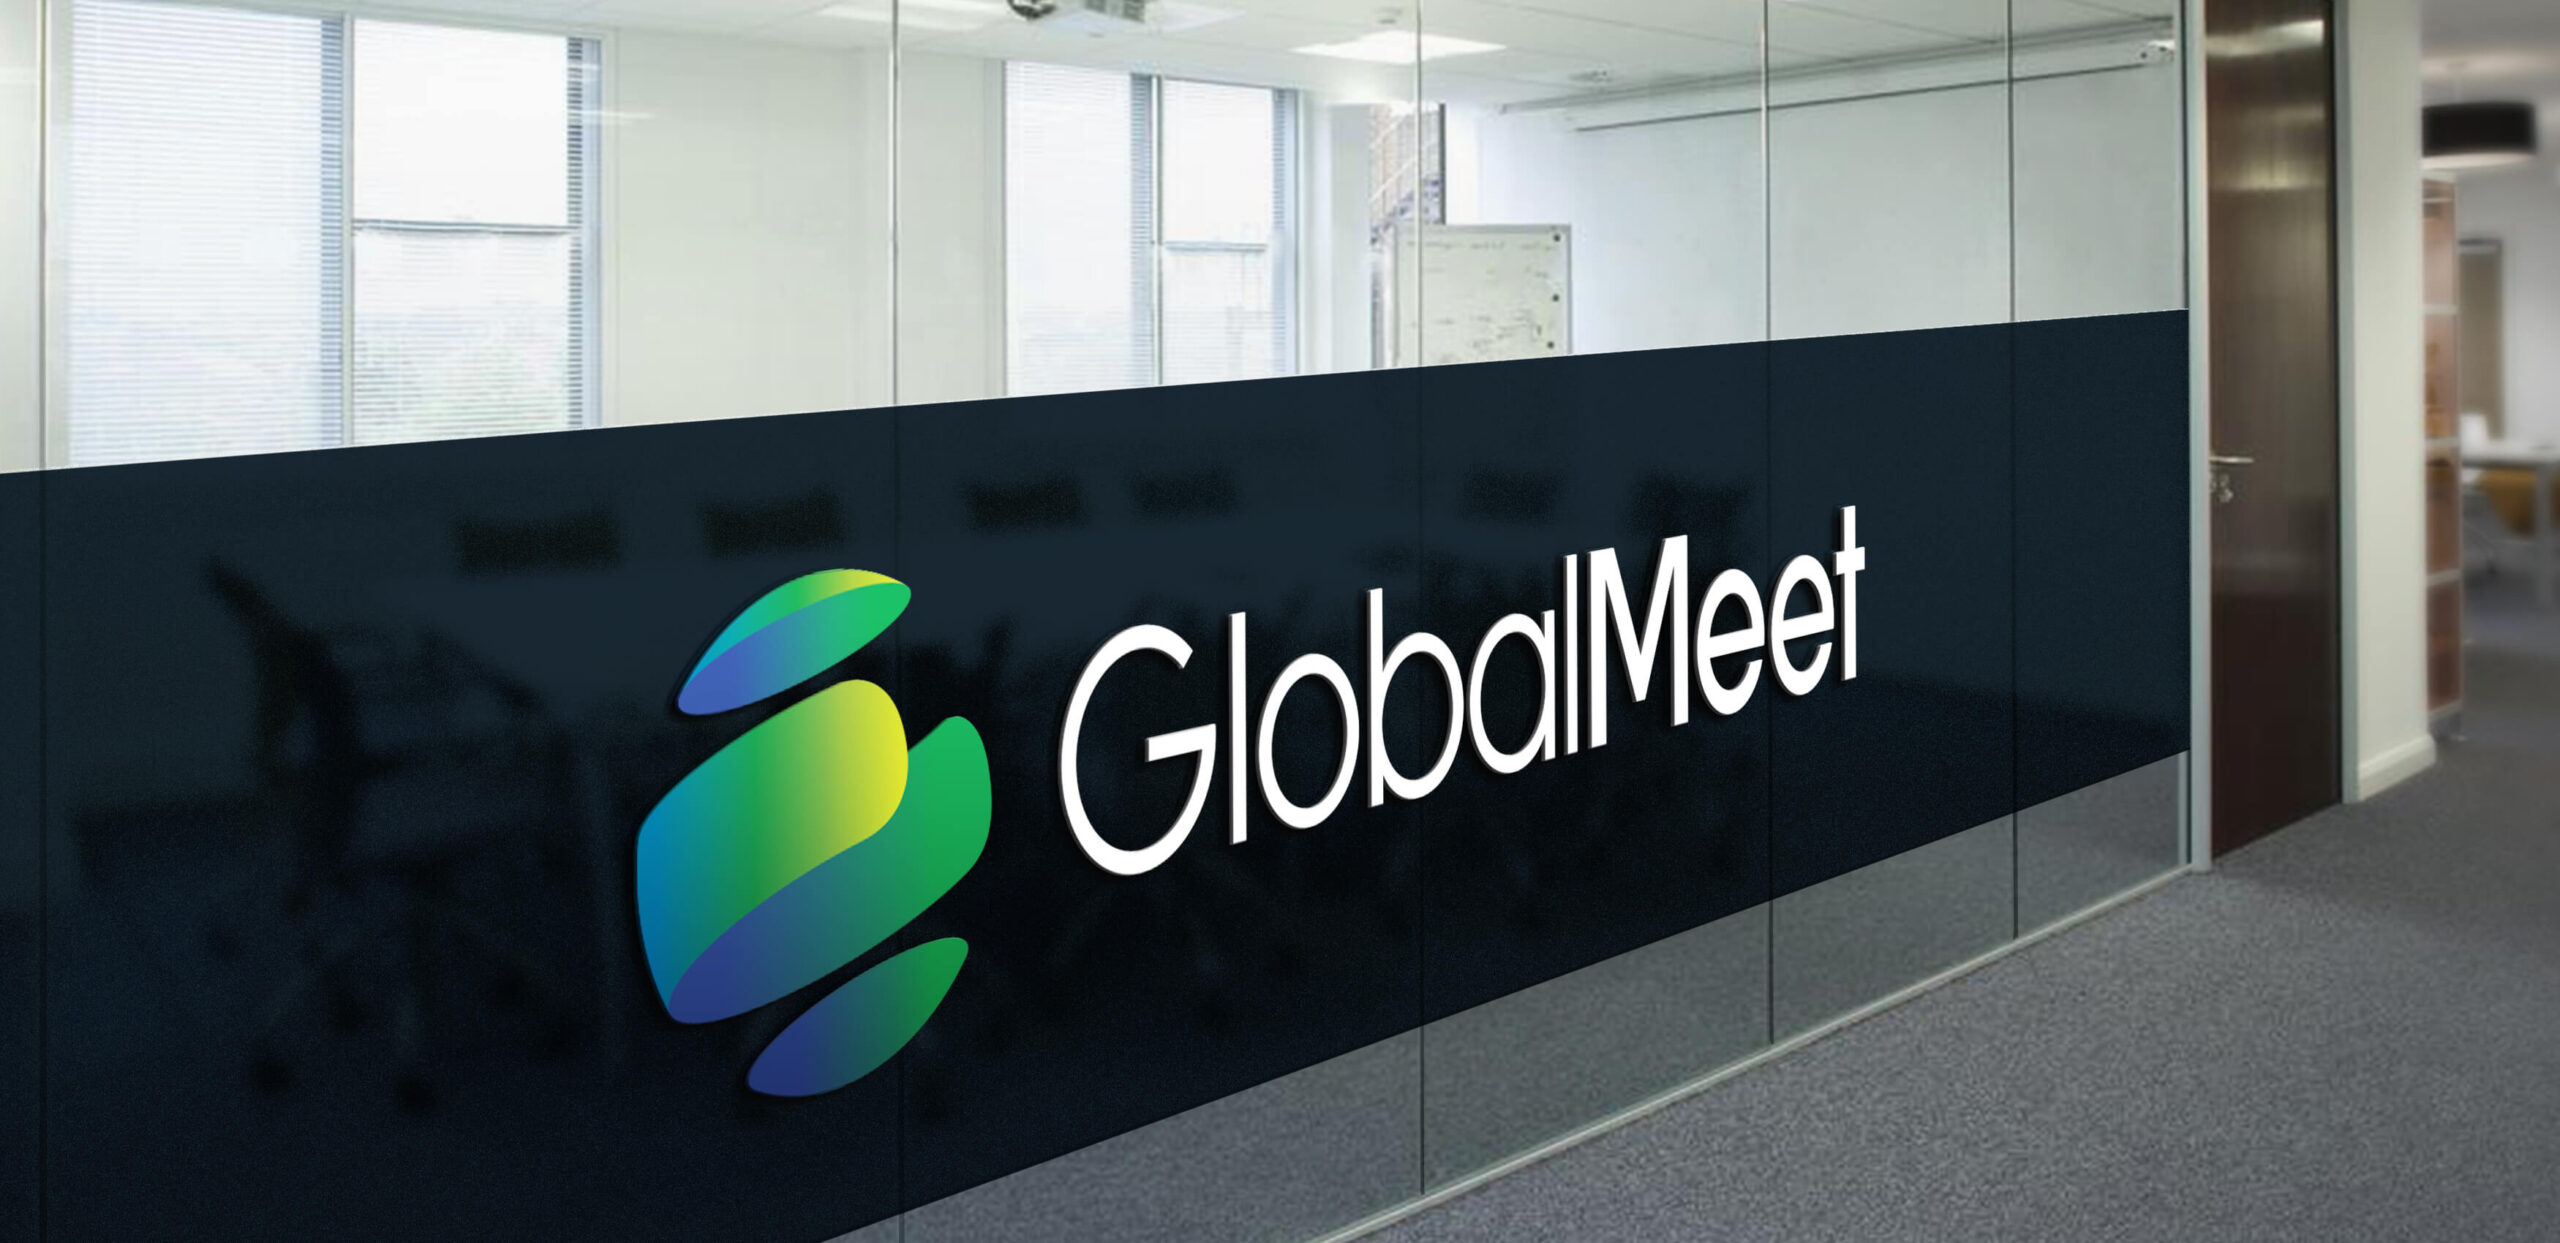 GlobalMeet logo inside of building